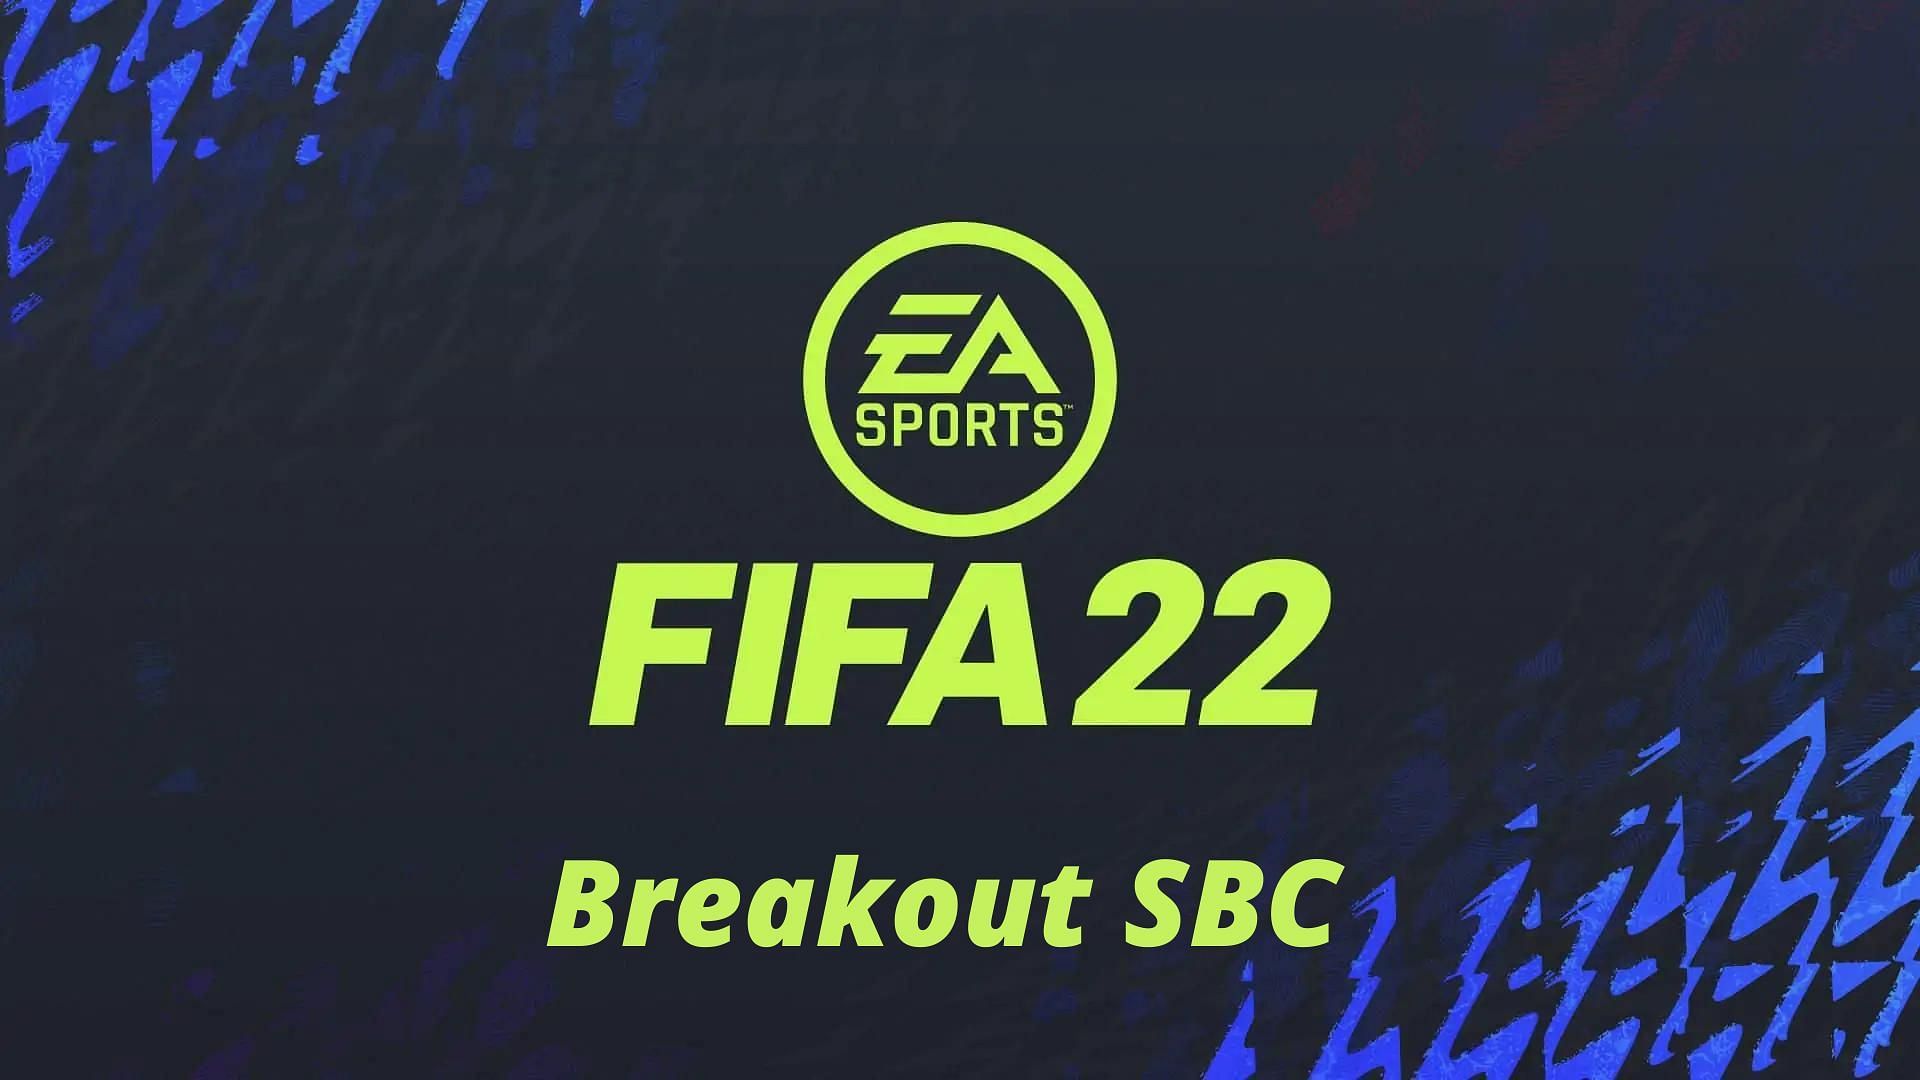 Breakout SBC is live in FIFA 22 (Image via Sportskeeda)